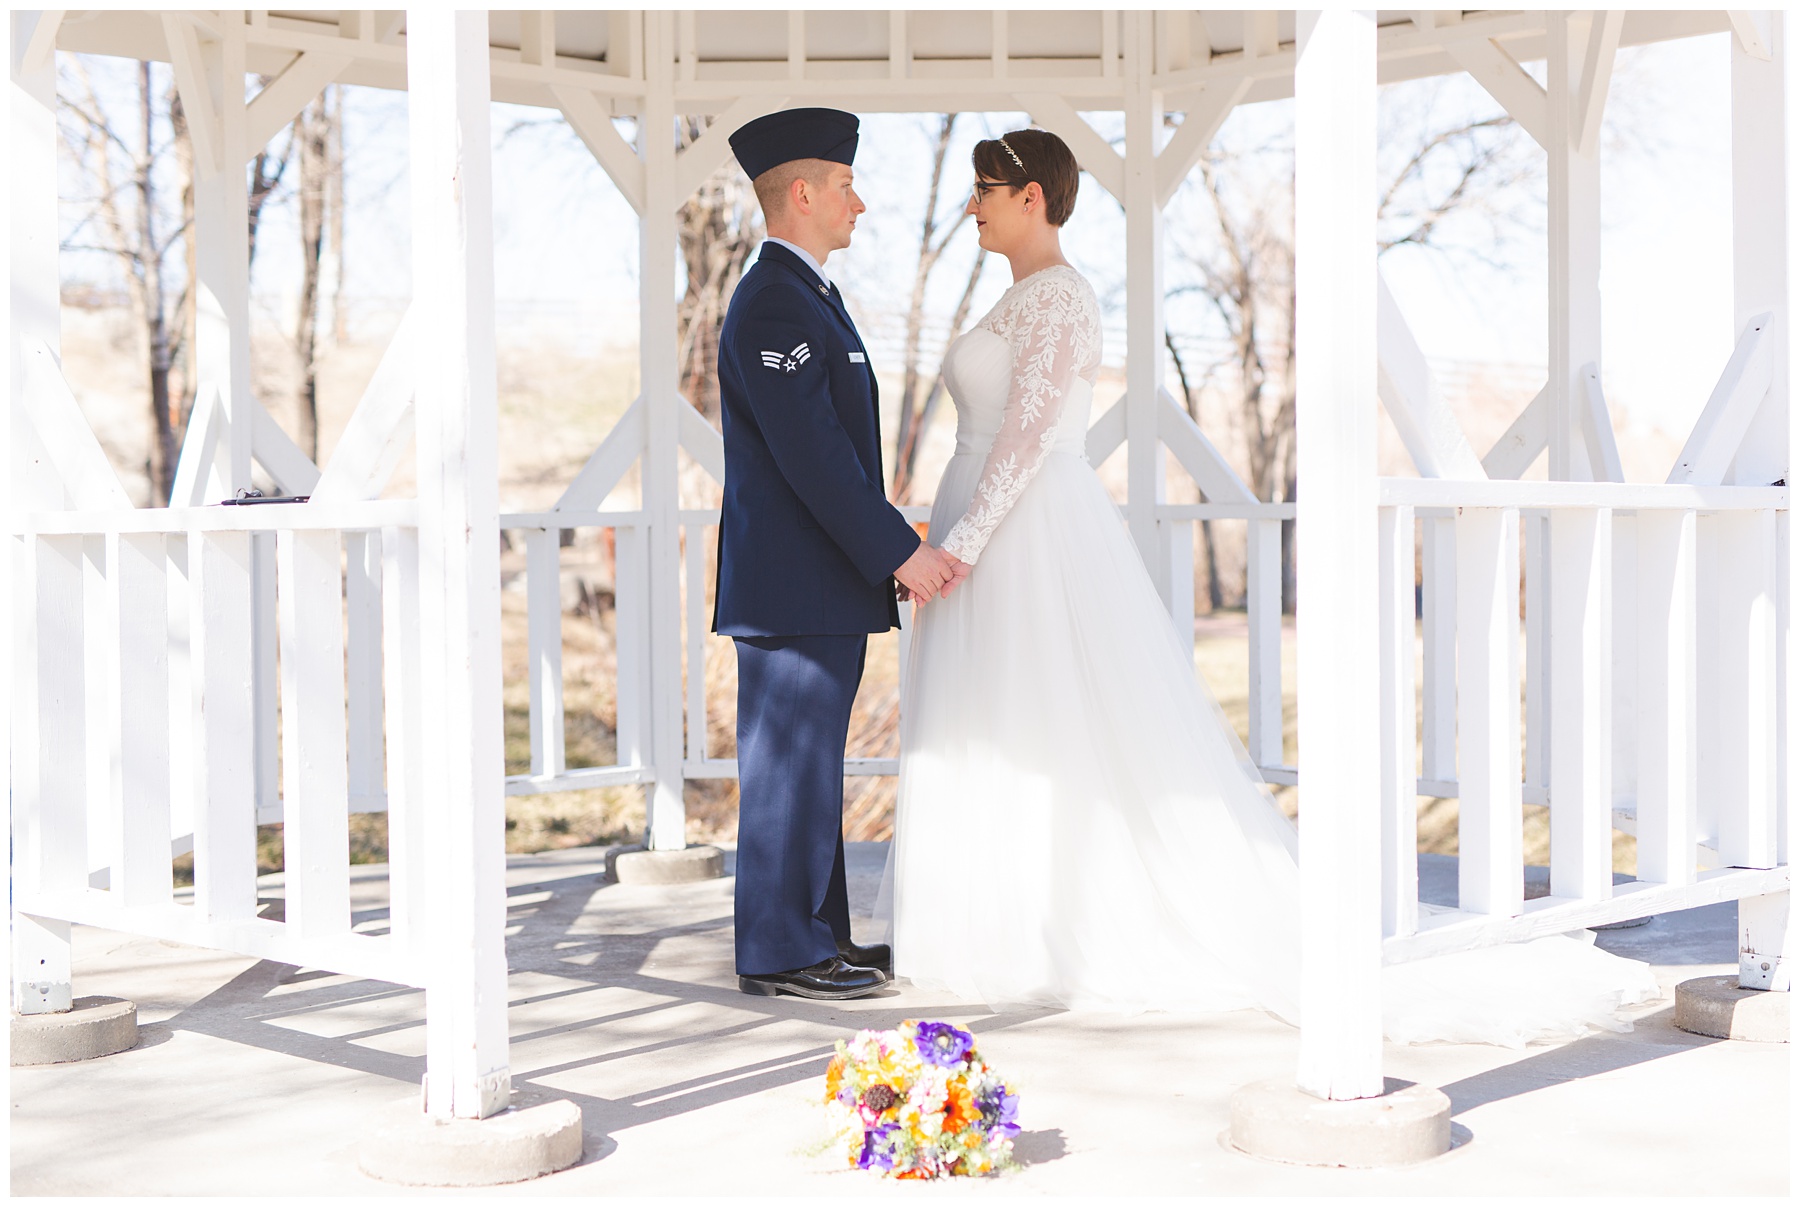 Military bride and groom in white gazebo